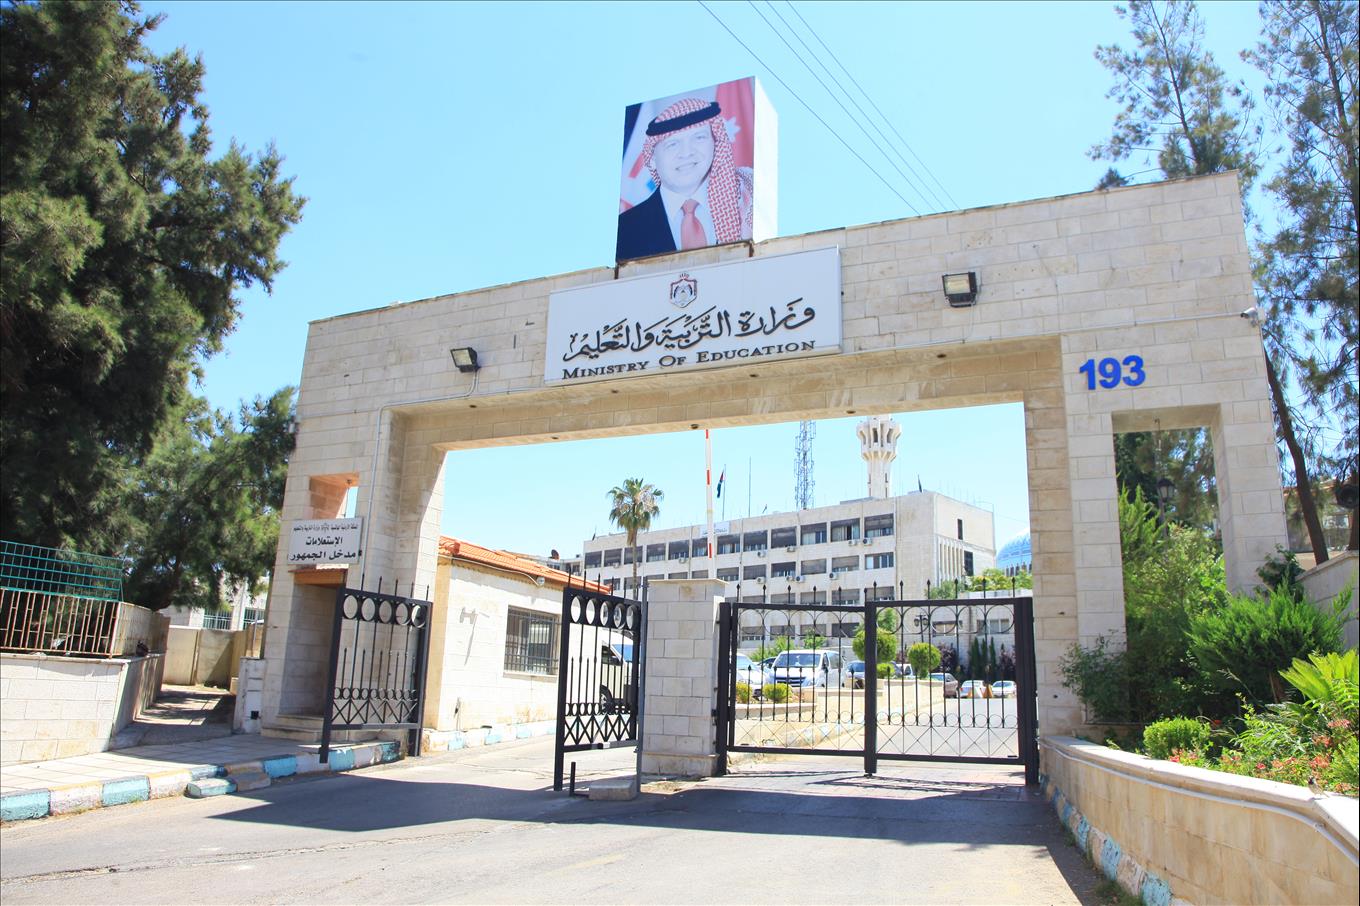 Jordan - Ministry announces voluntary immunization drive for students